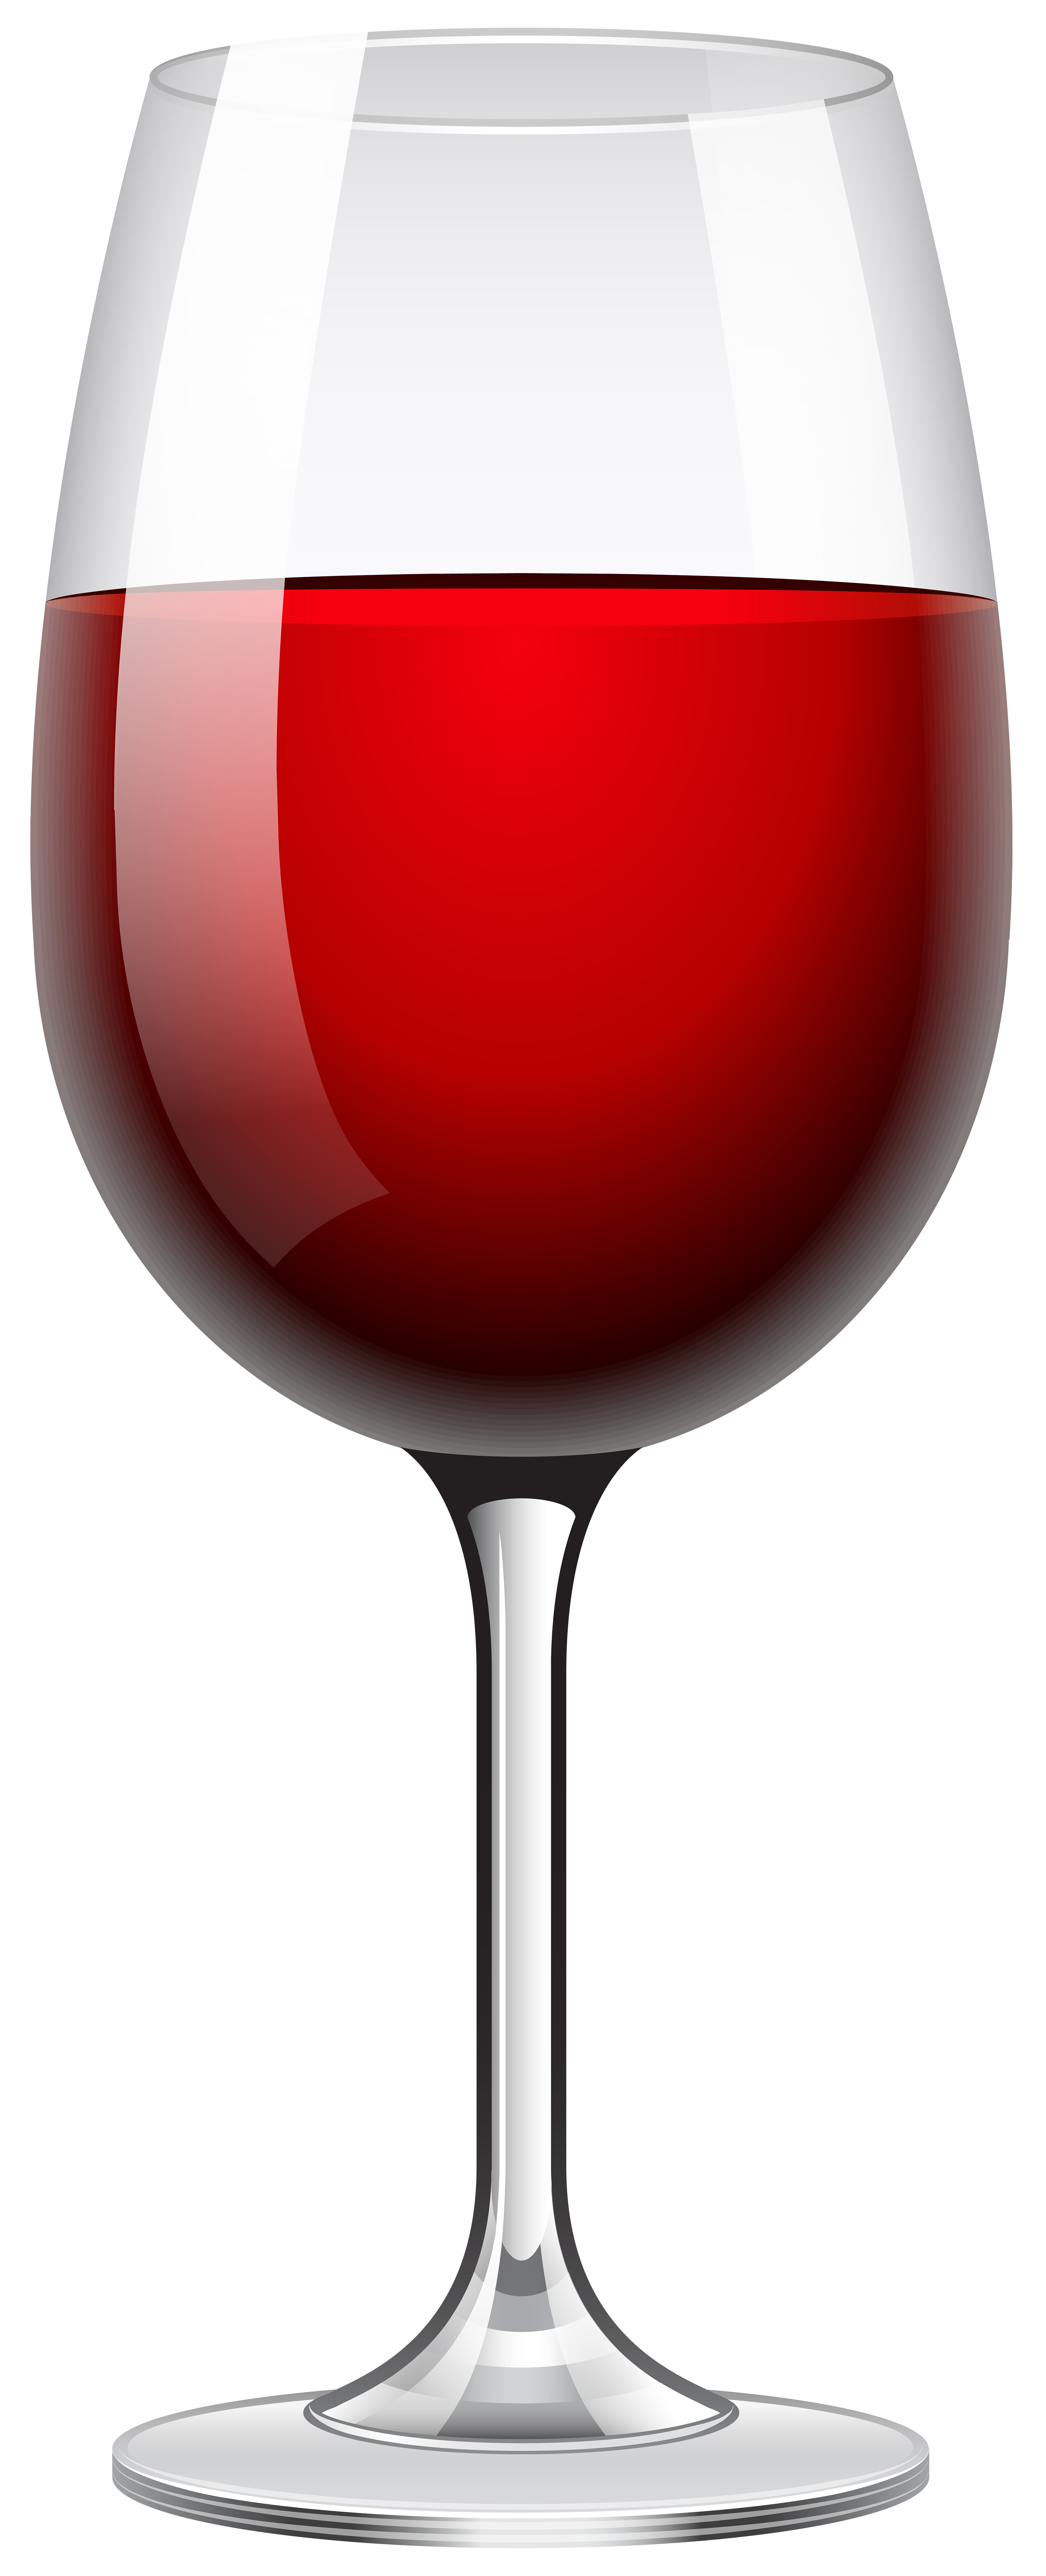 Red Wine White wine Champagne Wine glass.